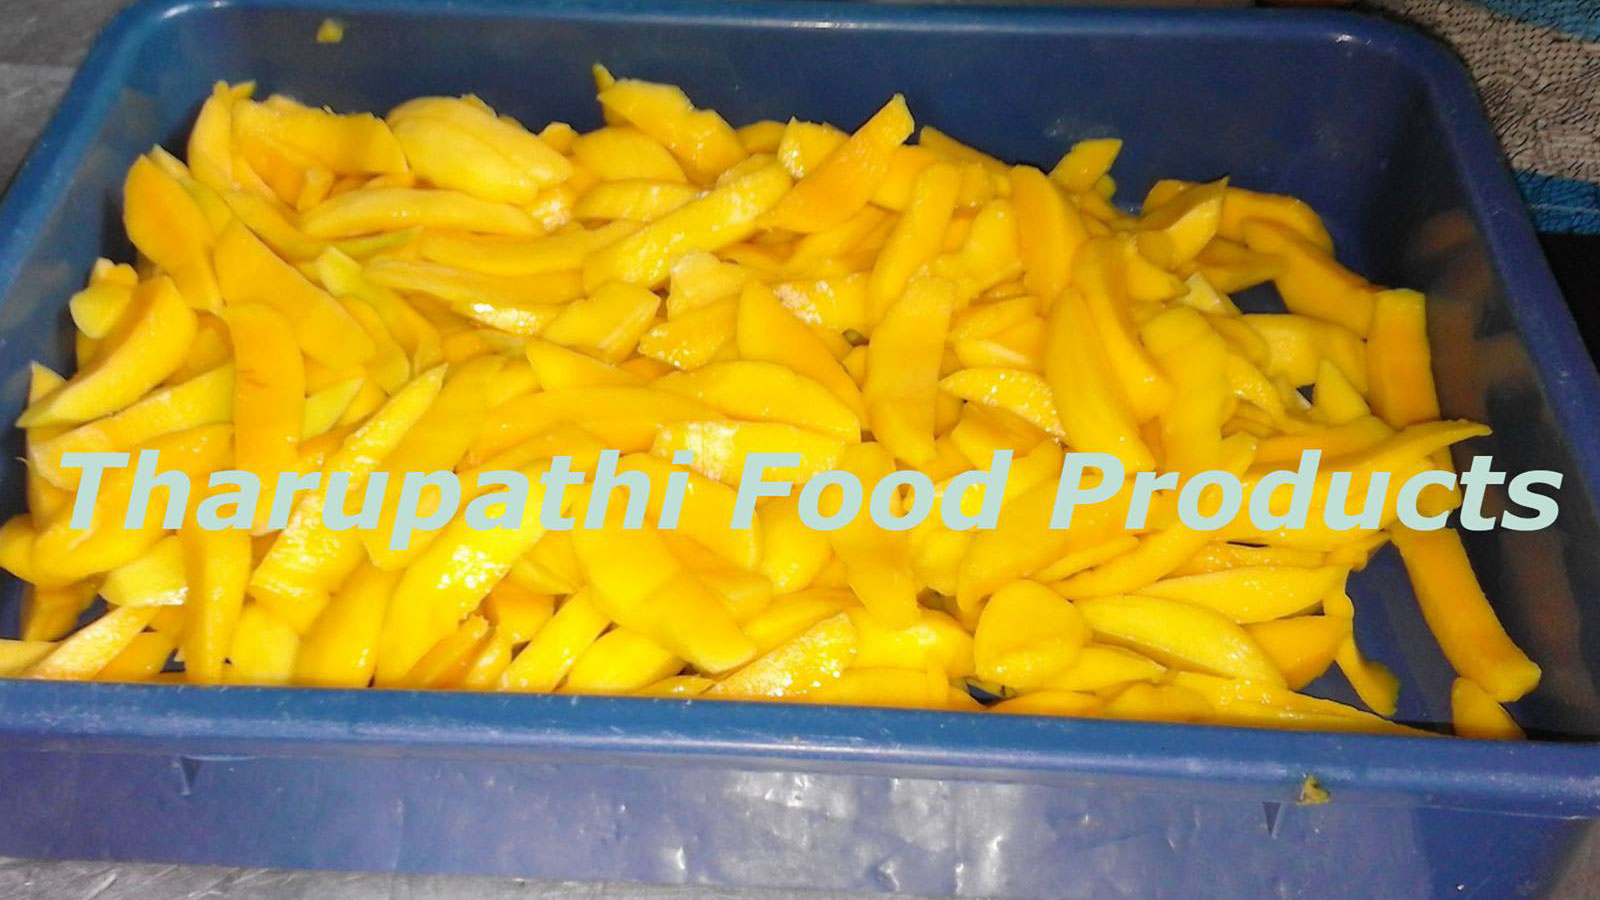 Tharupathi Food Products